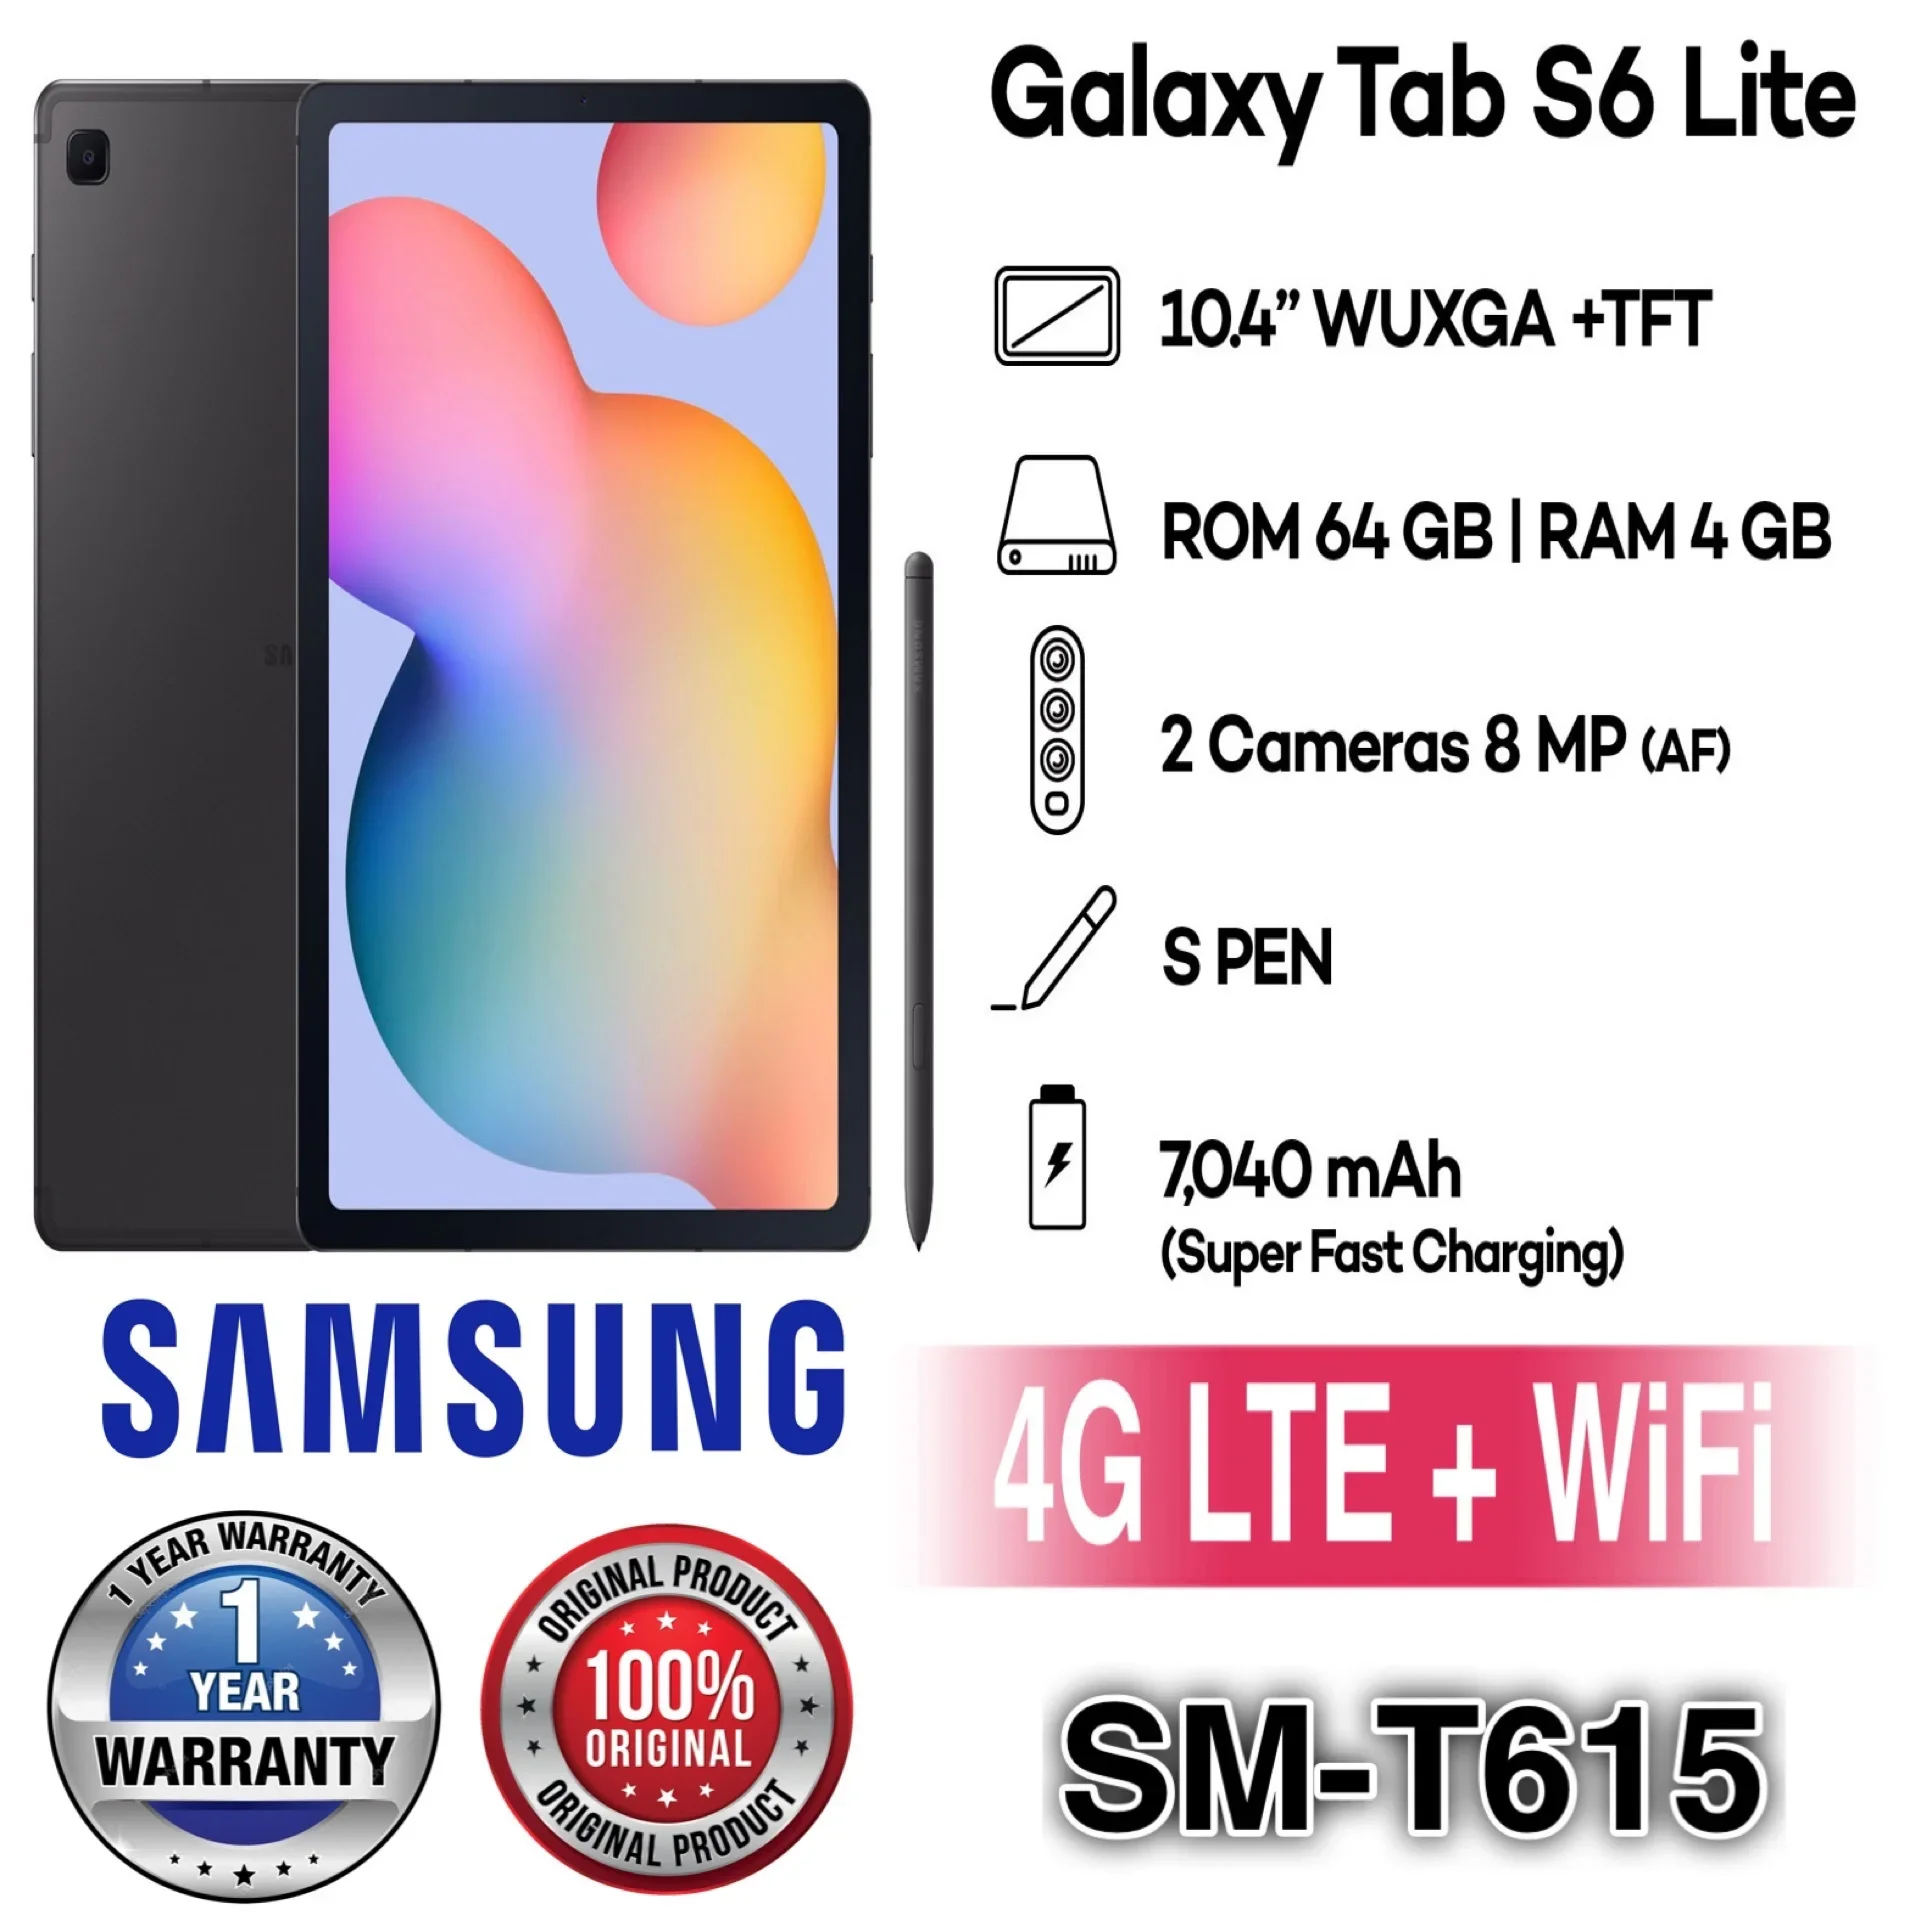 4G LTE Cellular - Samsung Galaxy Tab S6 Lite (64GB+4GB Ram) with S Pen